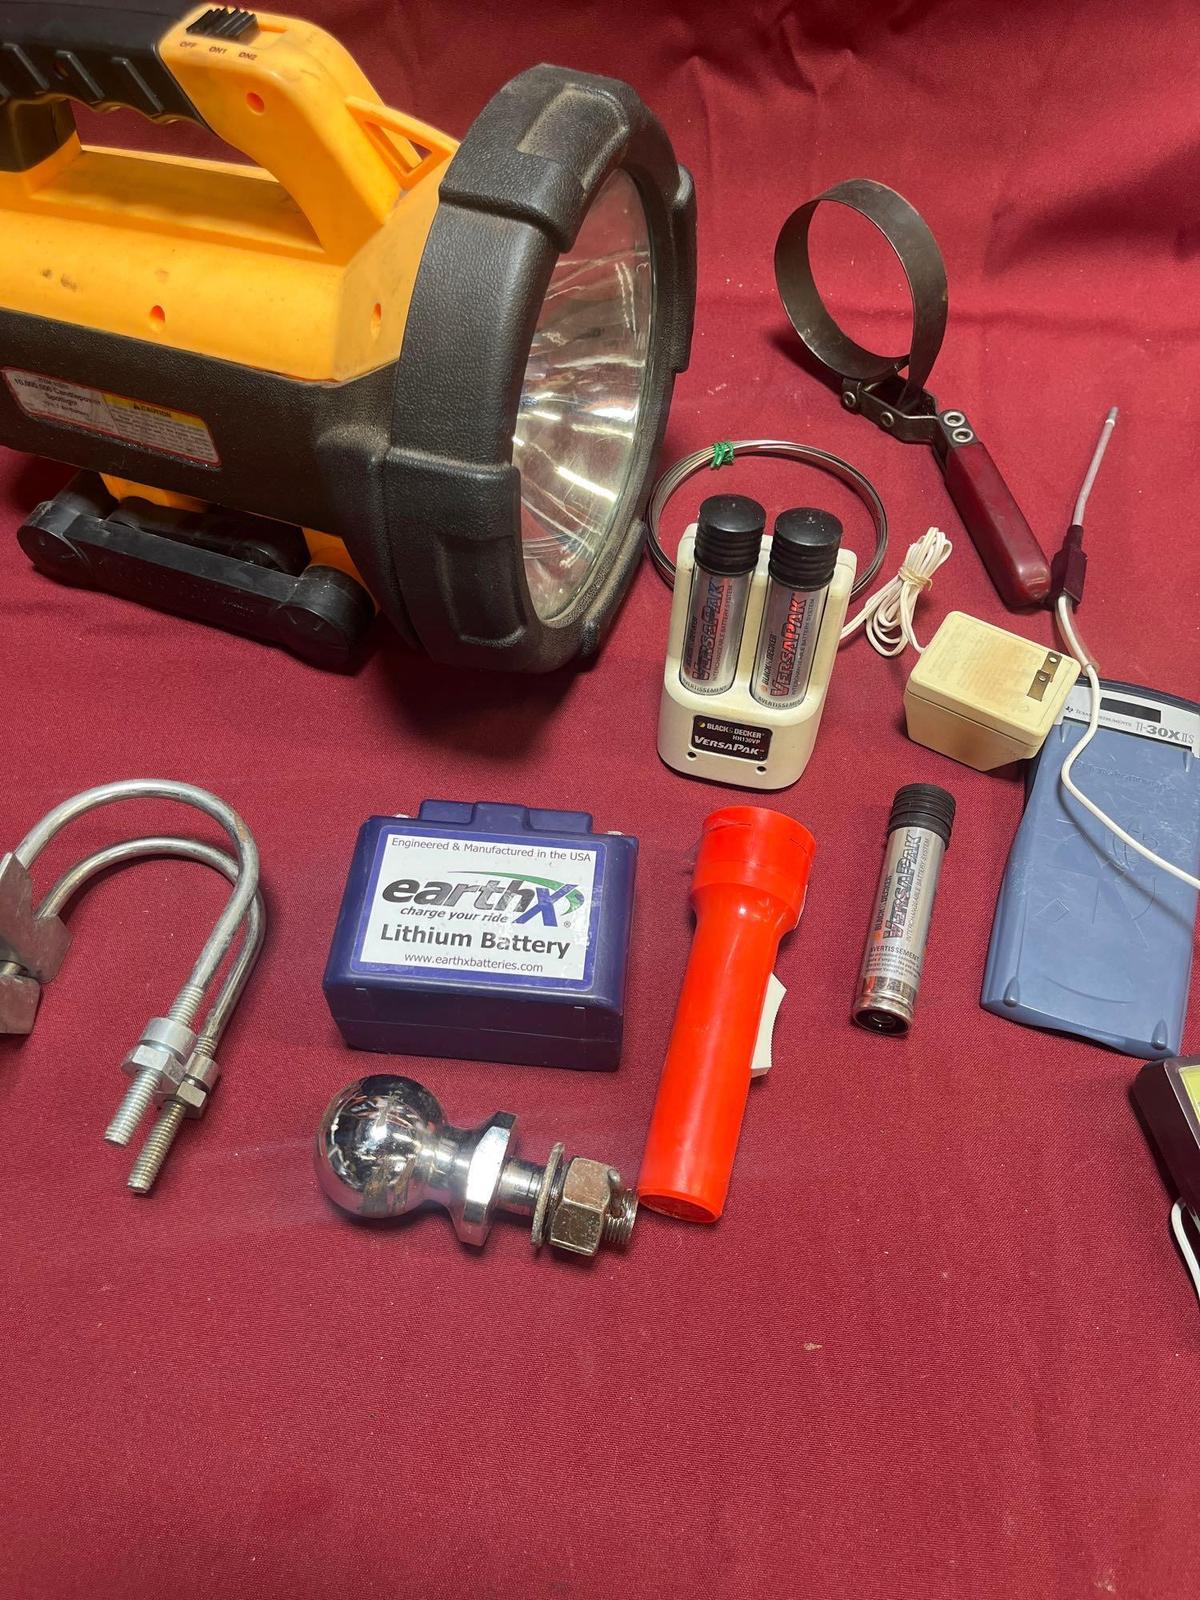 Assorted item's Candlepower spotlight no cord, PH meter, Versa pak, etc. 10 pieces